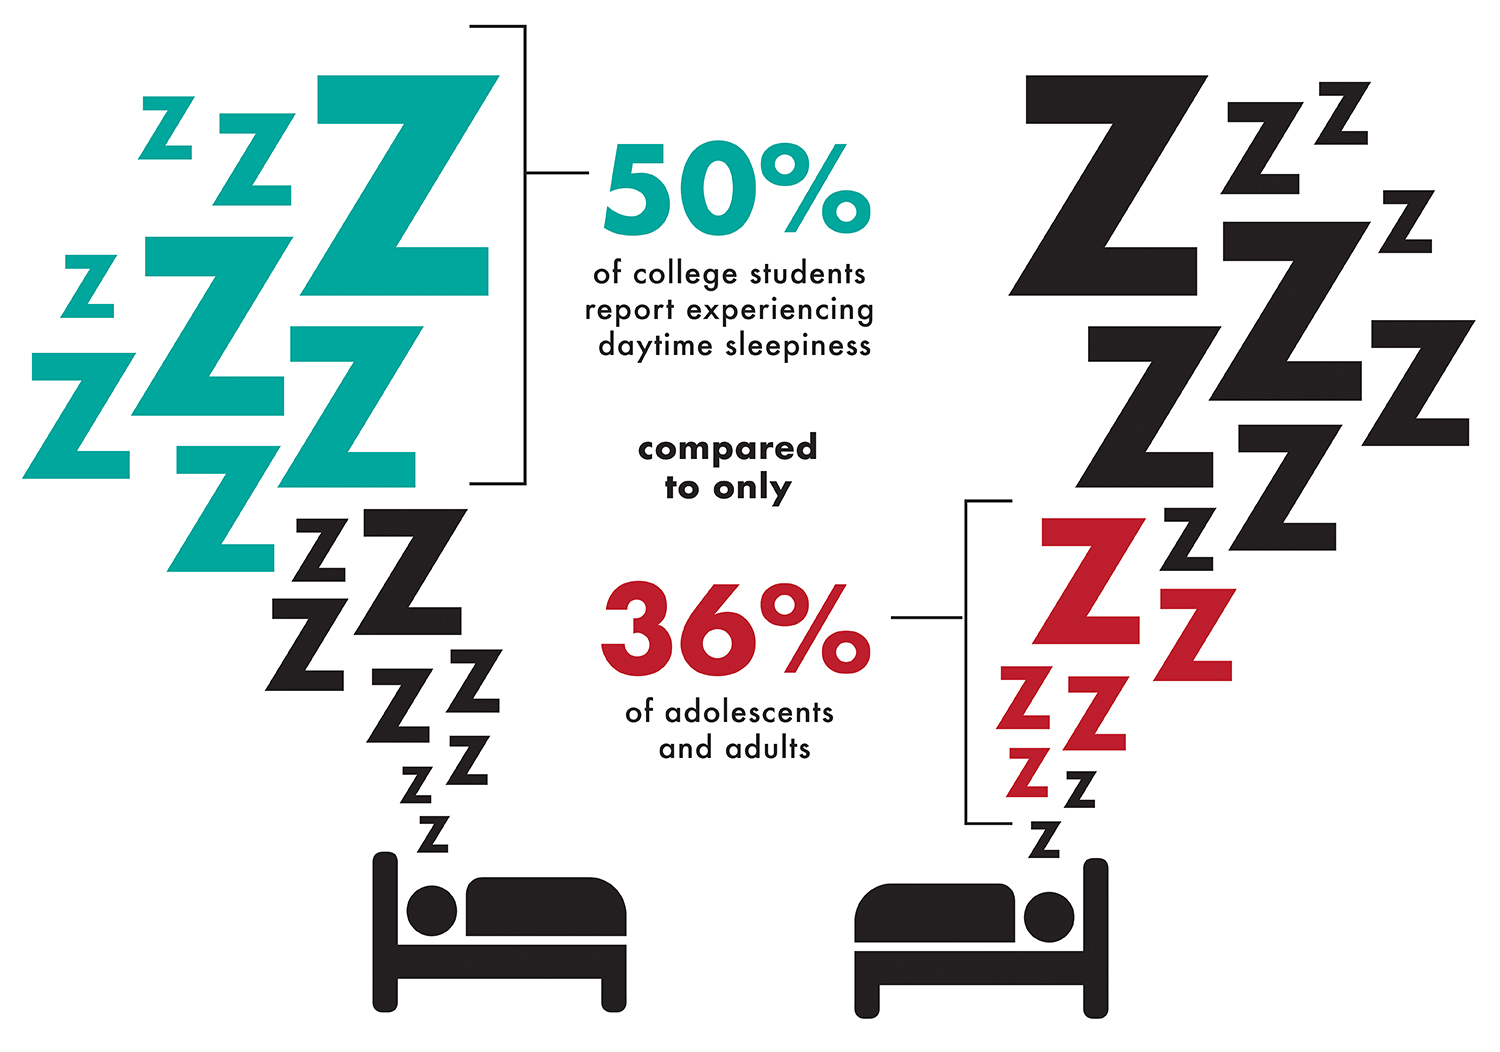 College students struggle to prioritize sleep